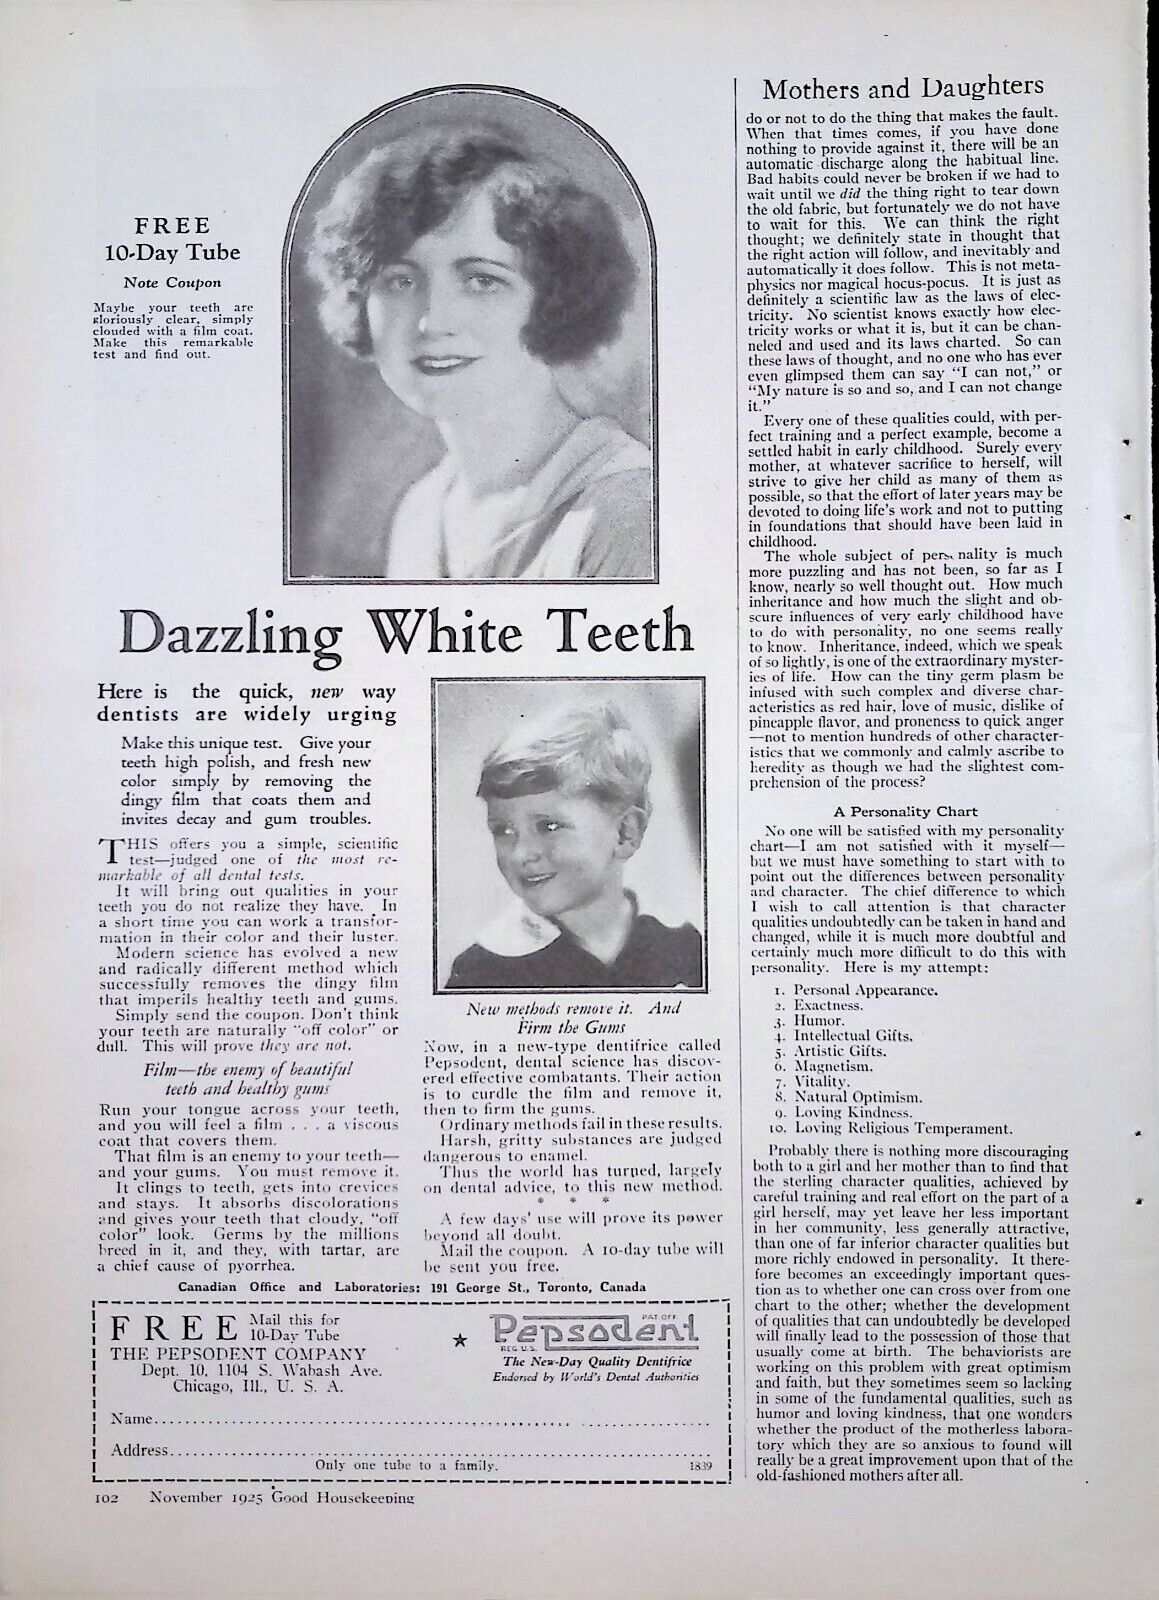 Pepsodent Advertising Print Ad Good Housekeeping Magazine November 1925 